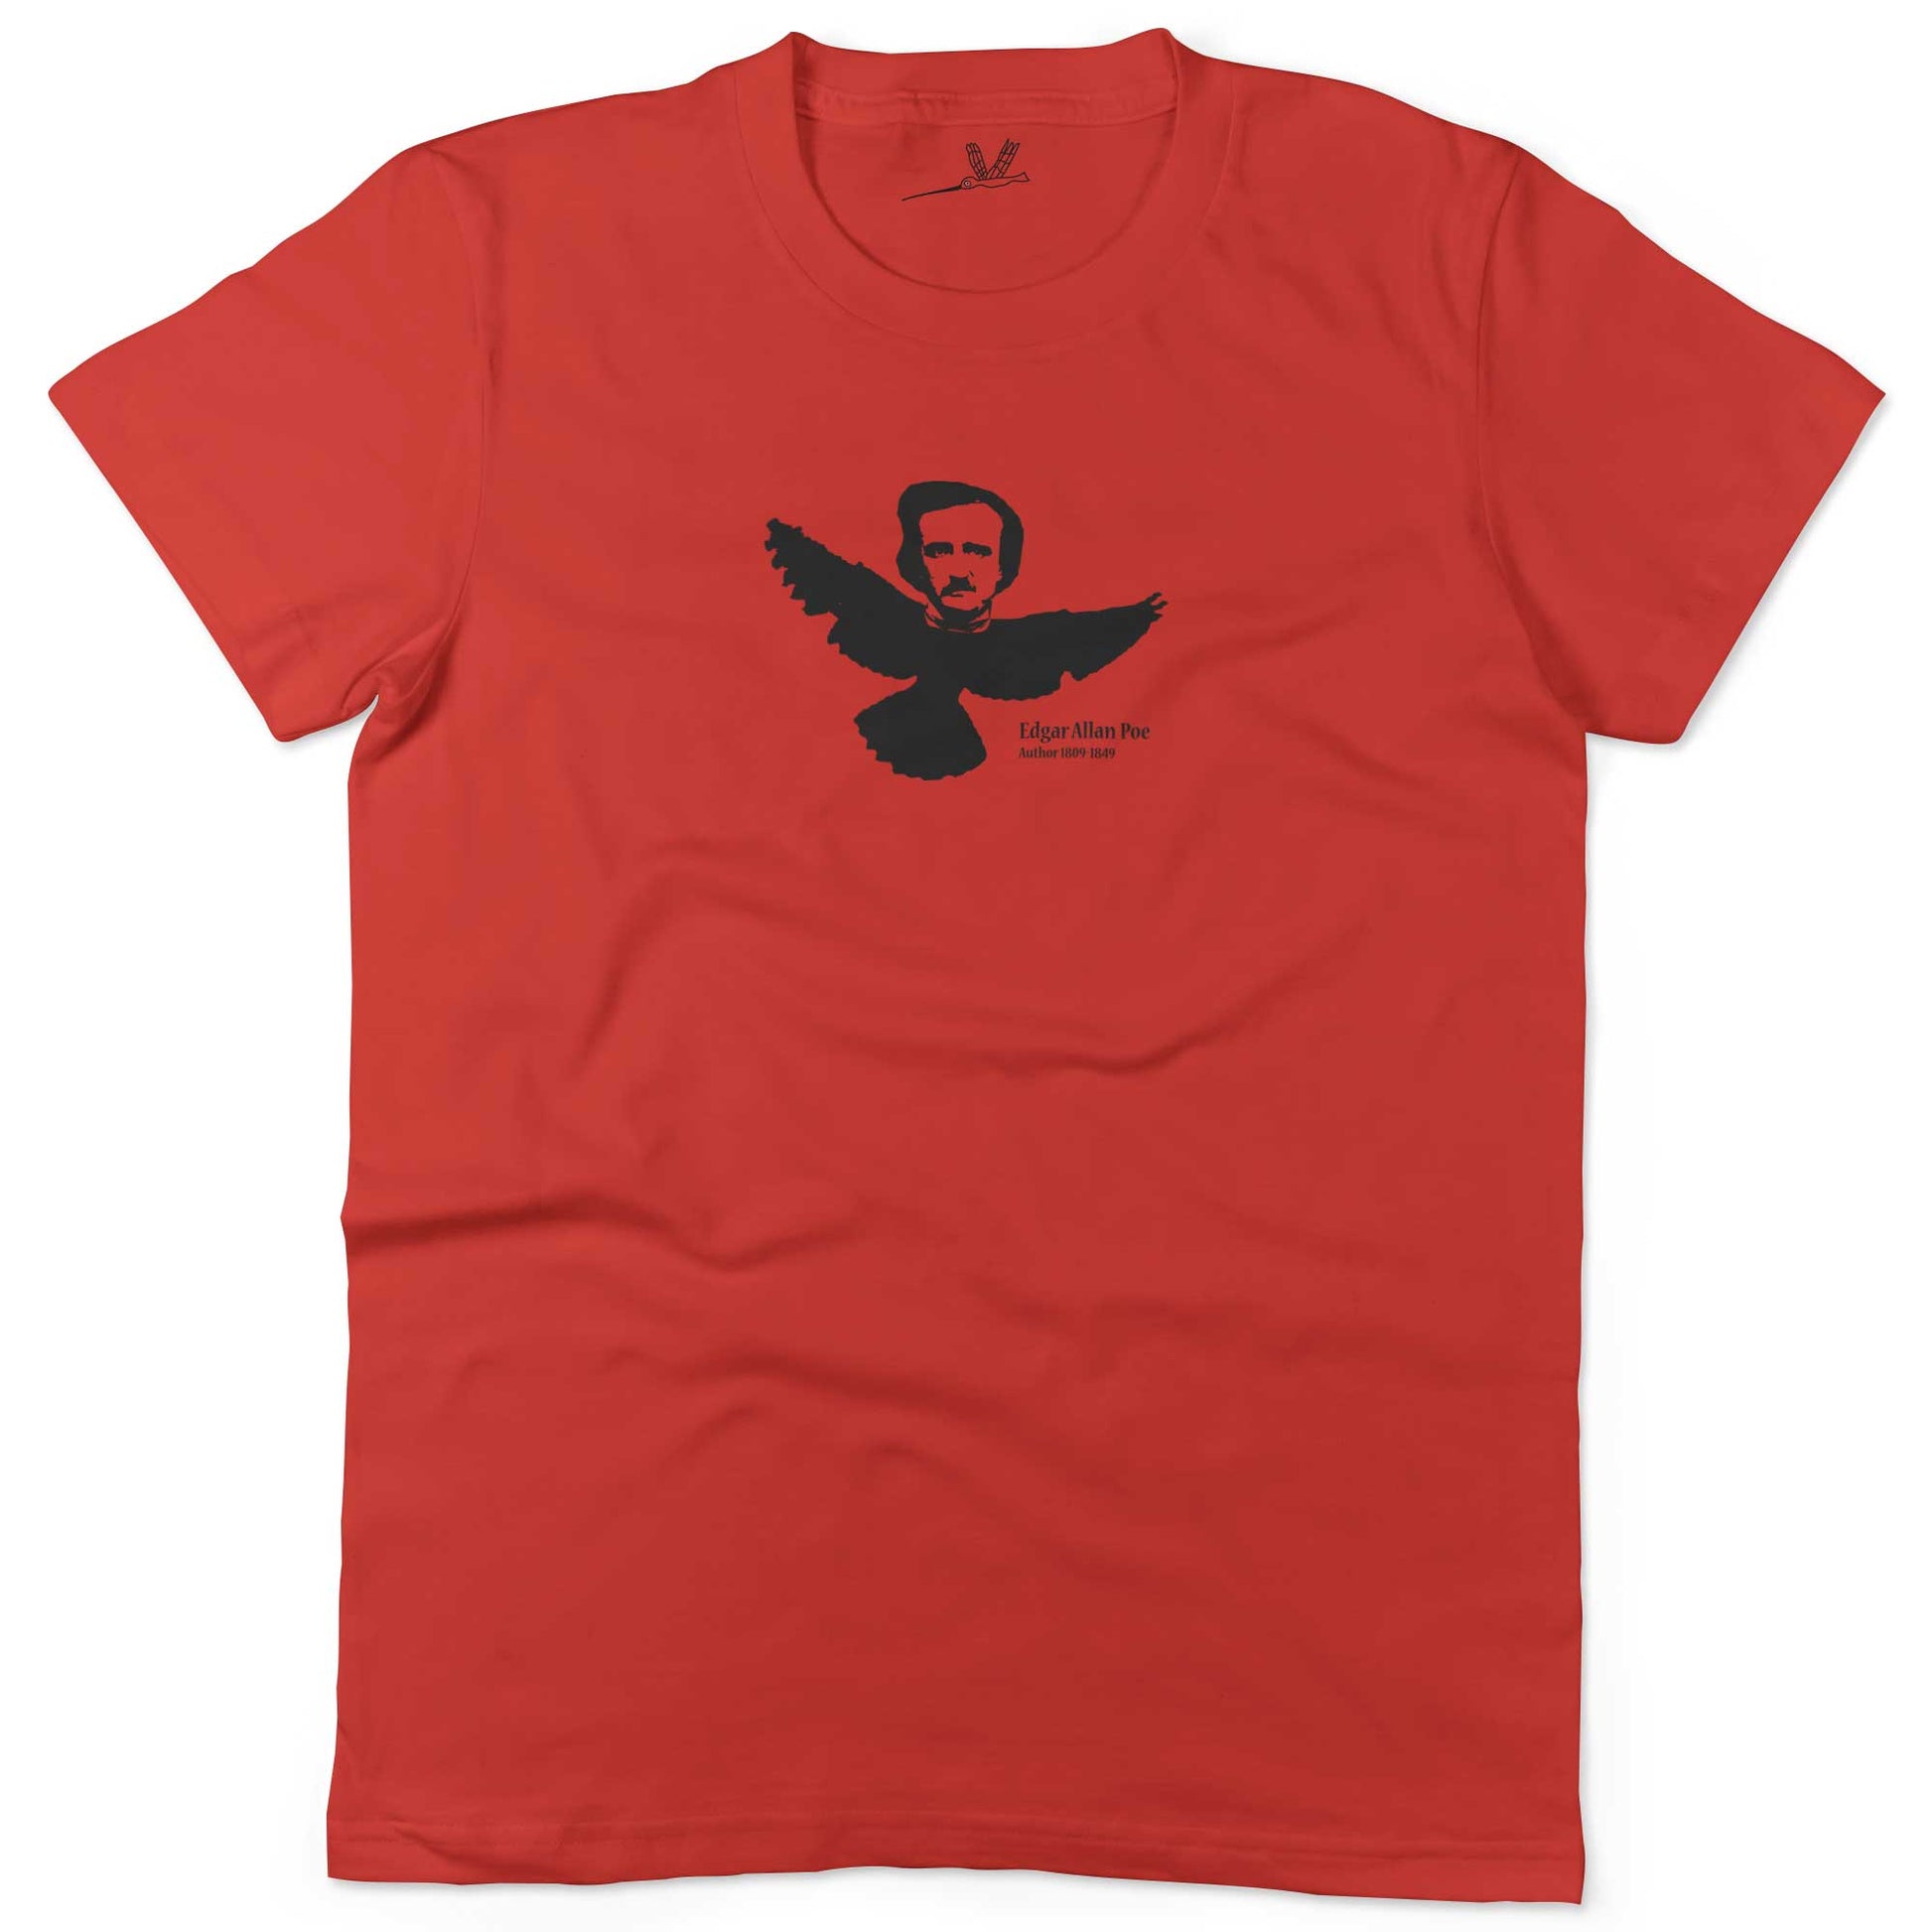 Edgar Allan Poe Unisex Or Women's Cotton T-shirt-Red-Woman